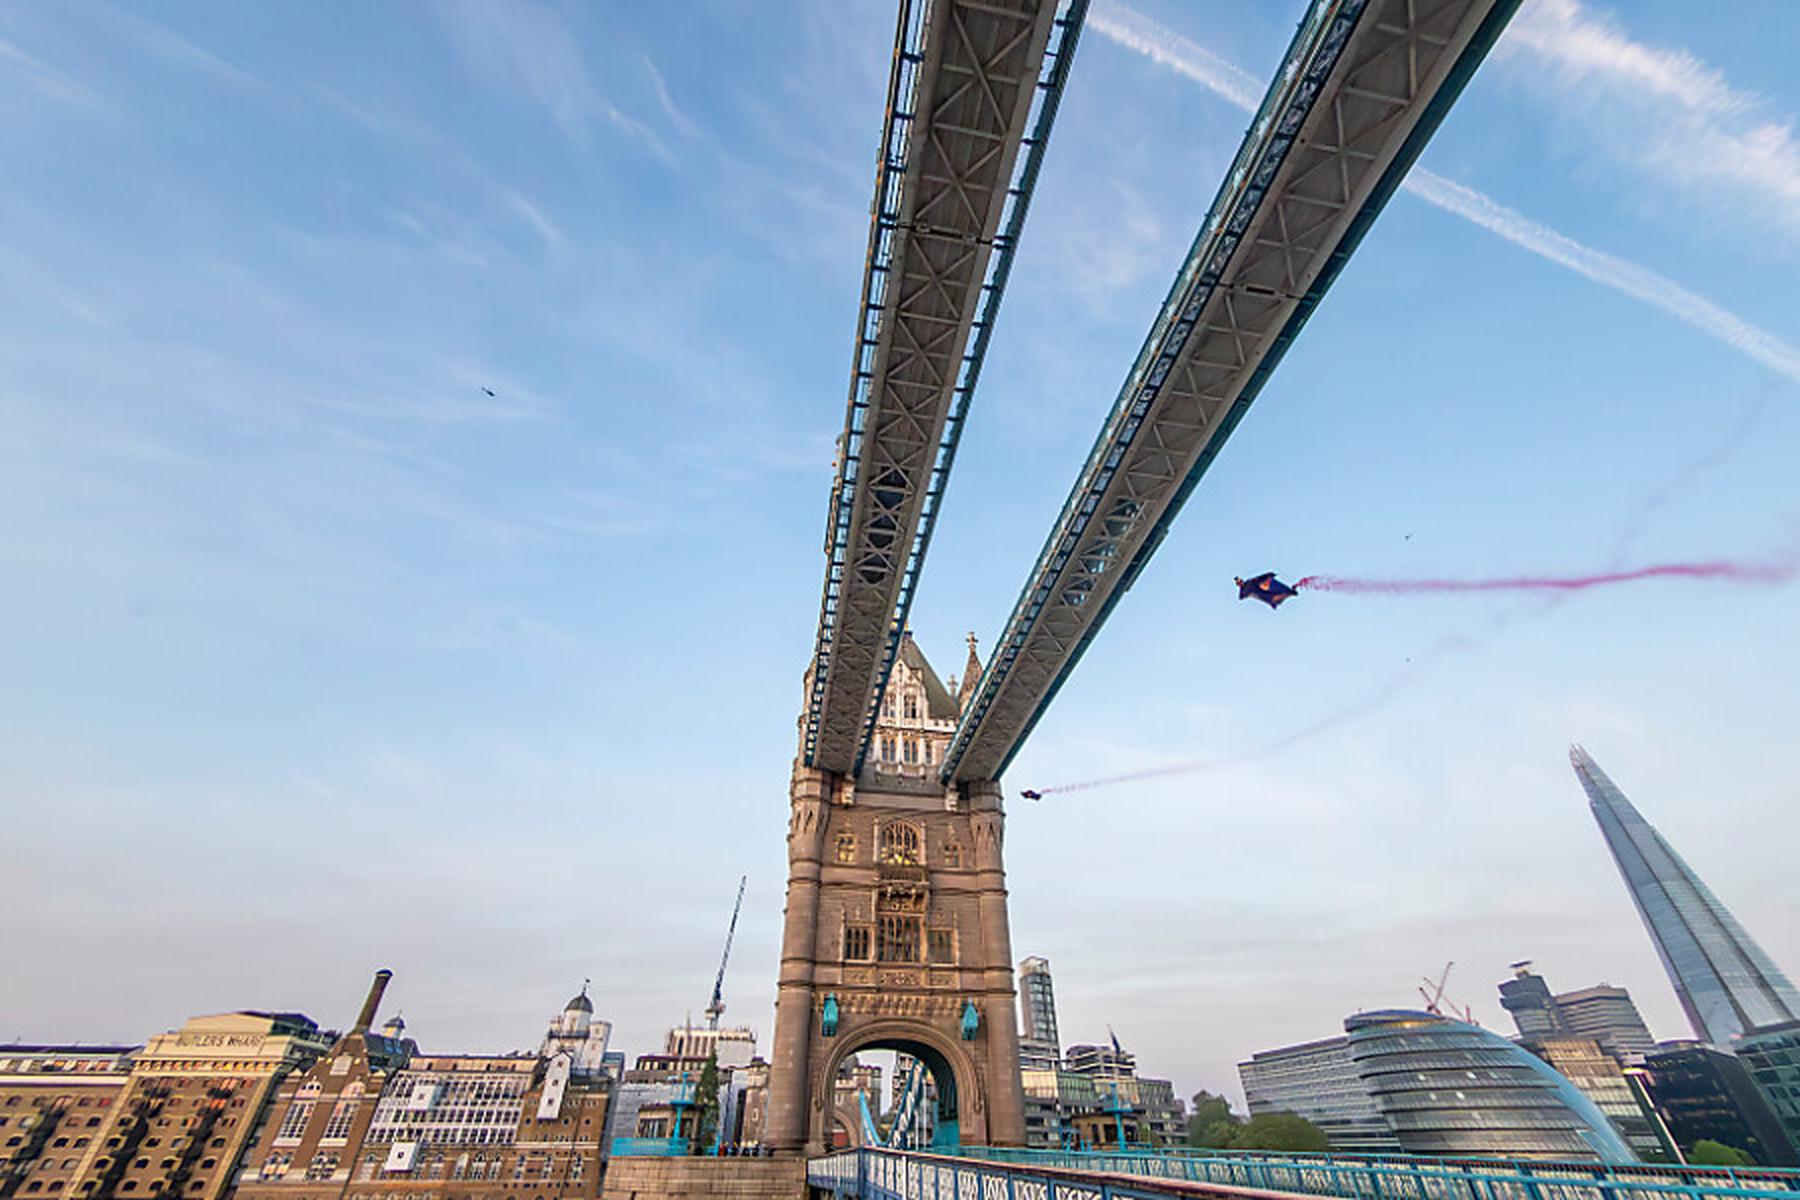 London/Wien: Zwei Austro-Skydiver flogen durch Londoner Tower Bridge